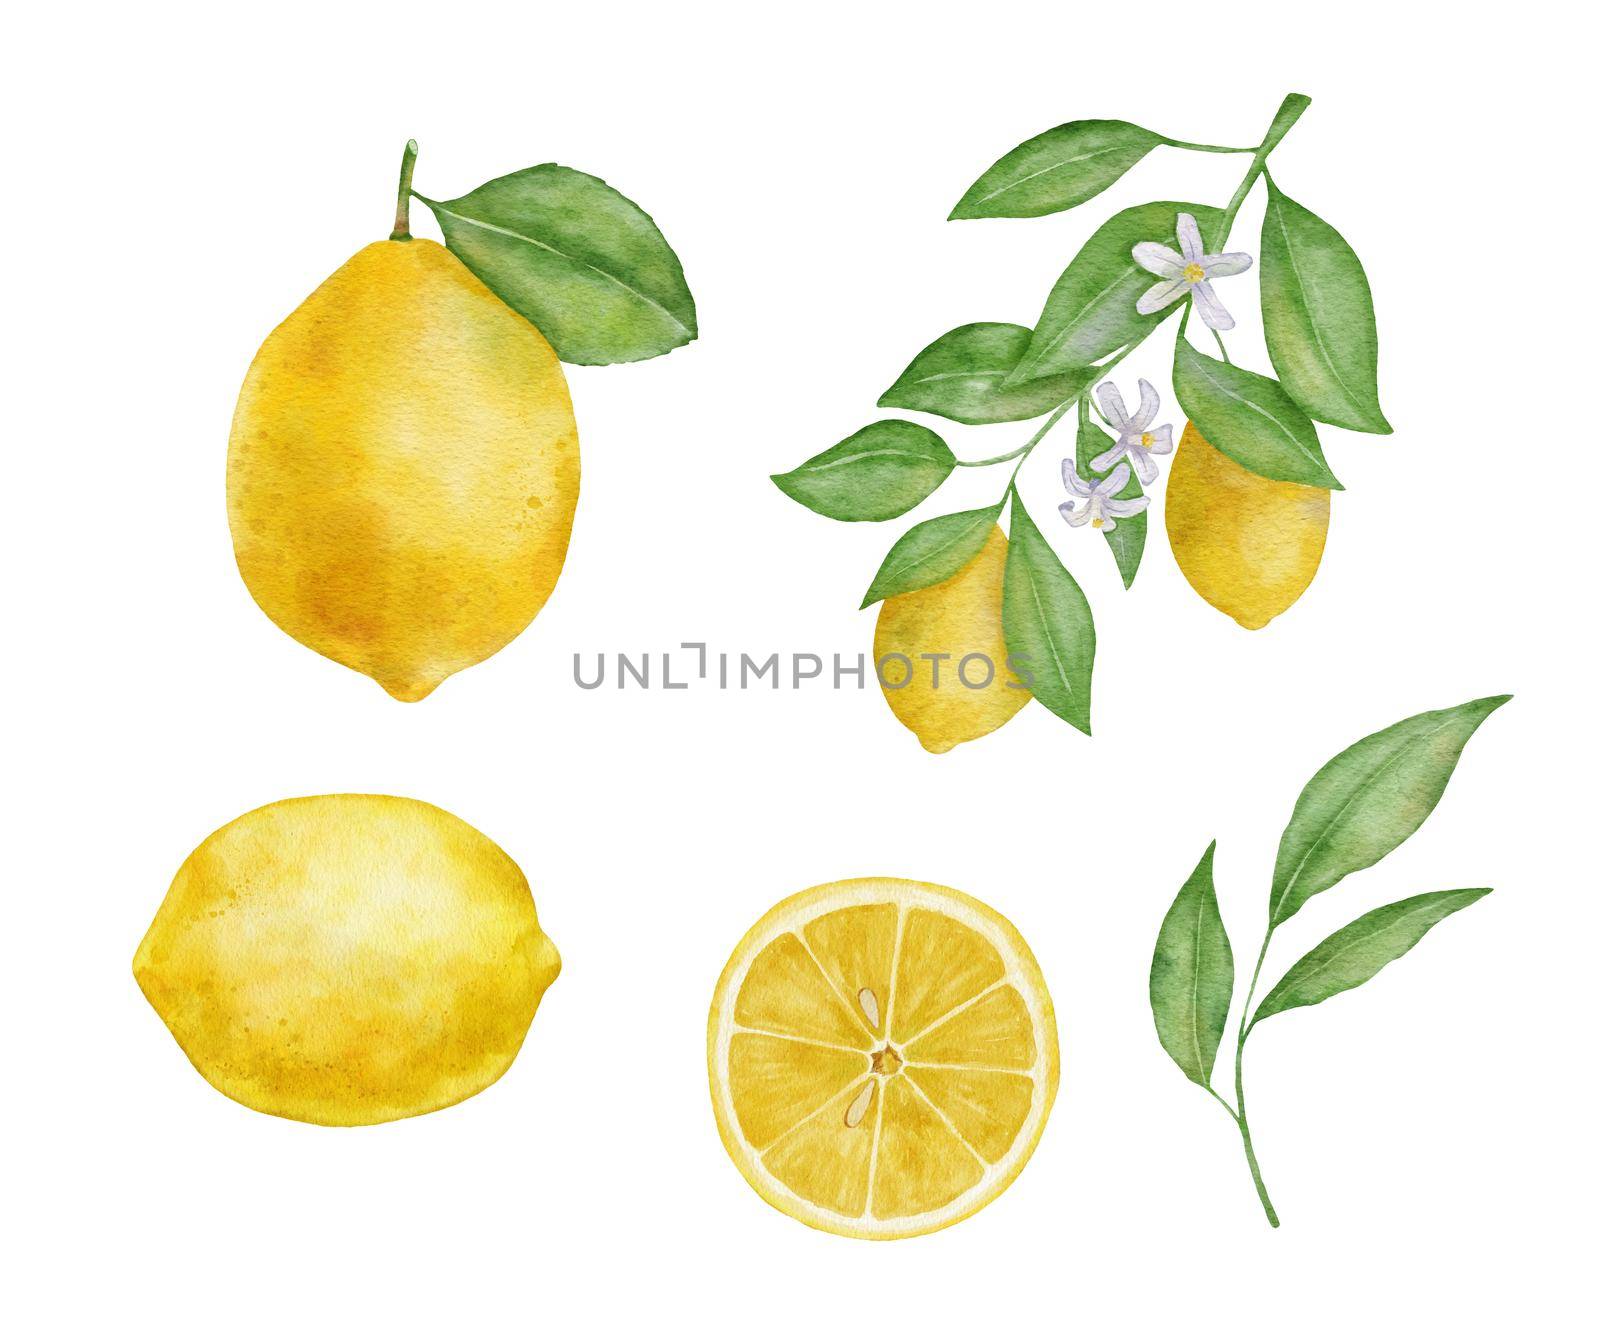 Lemon fruits with leaves and flower watercolor set. Hand draw illustration isolated on white. Slice of lemon by ElenaPlatova